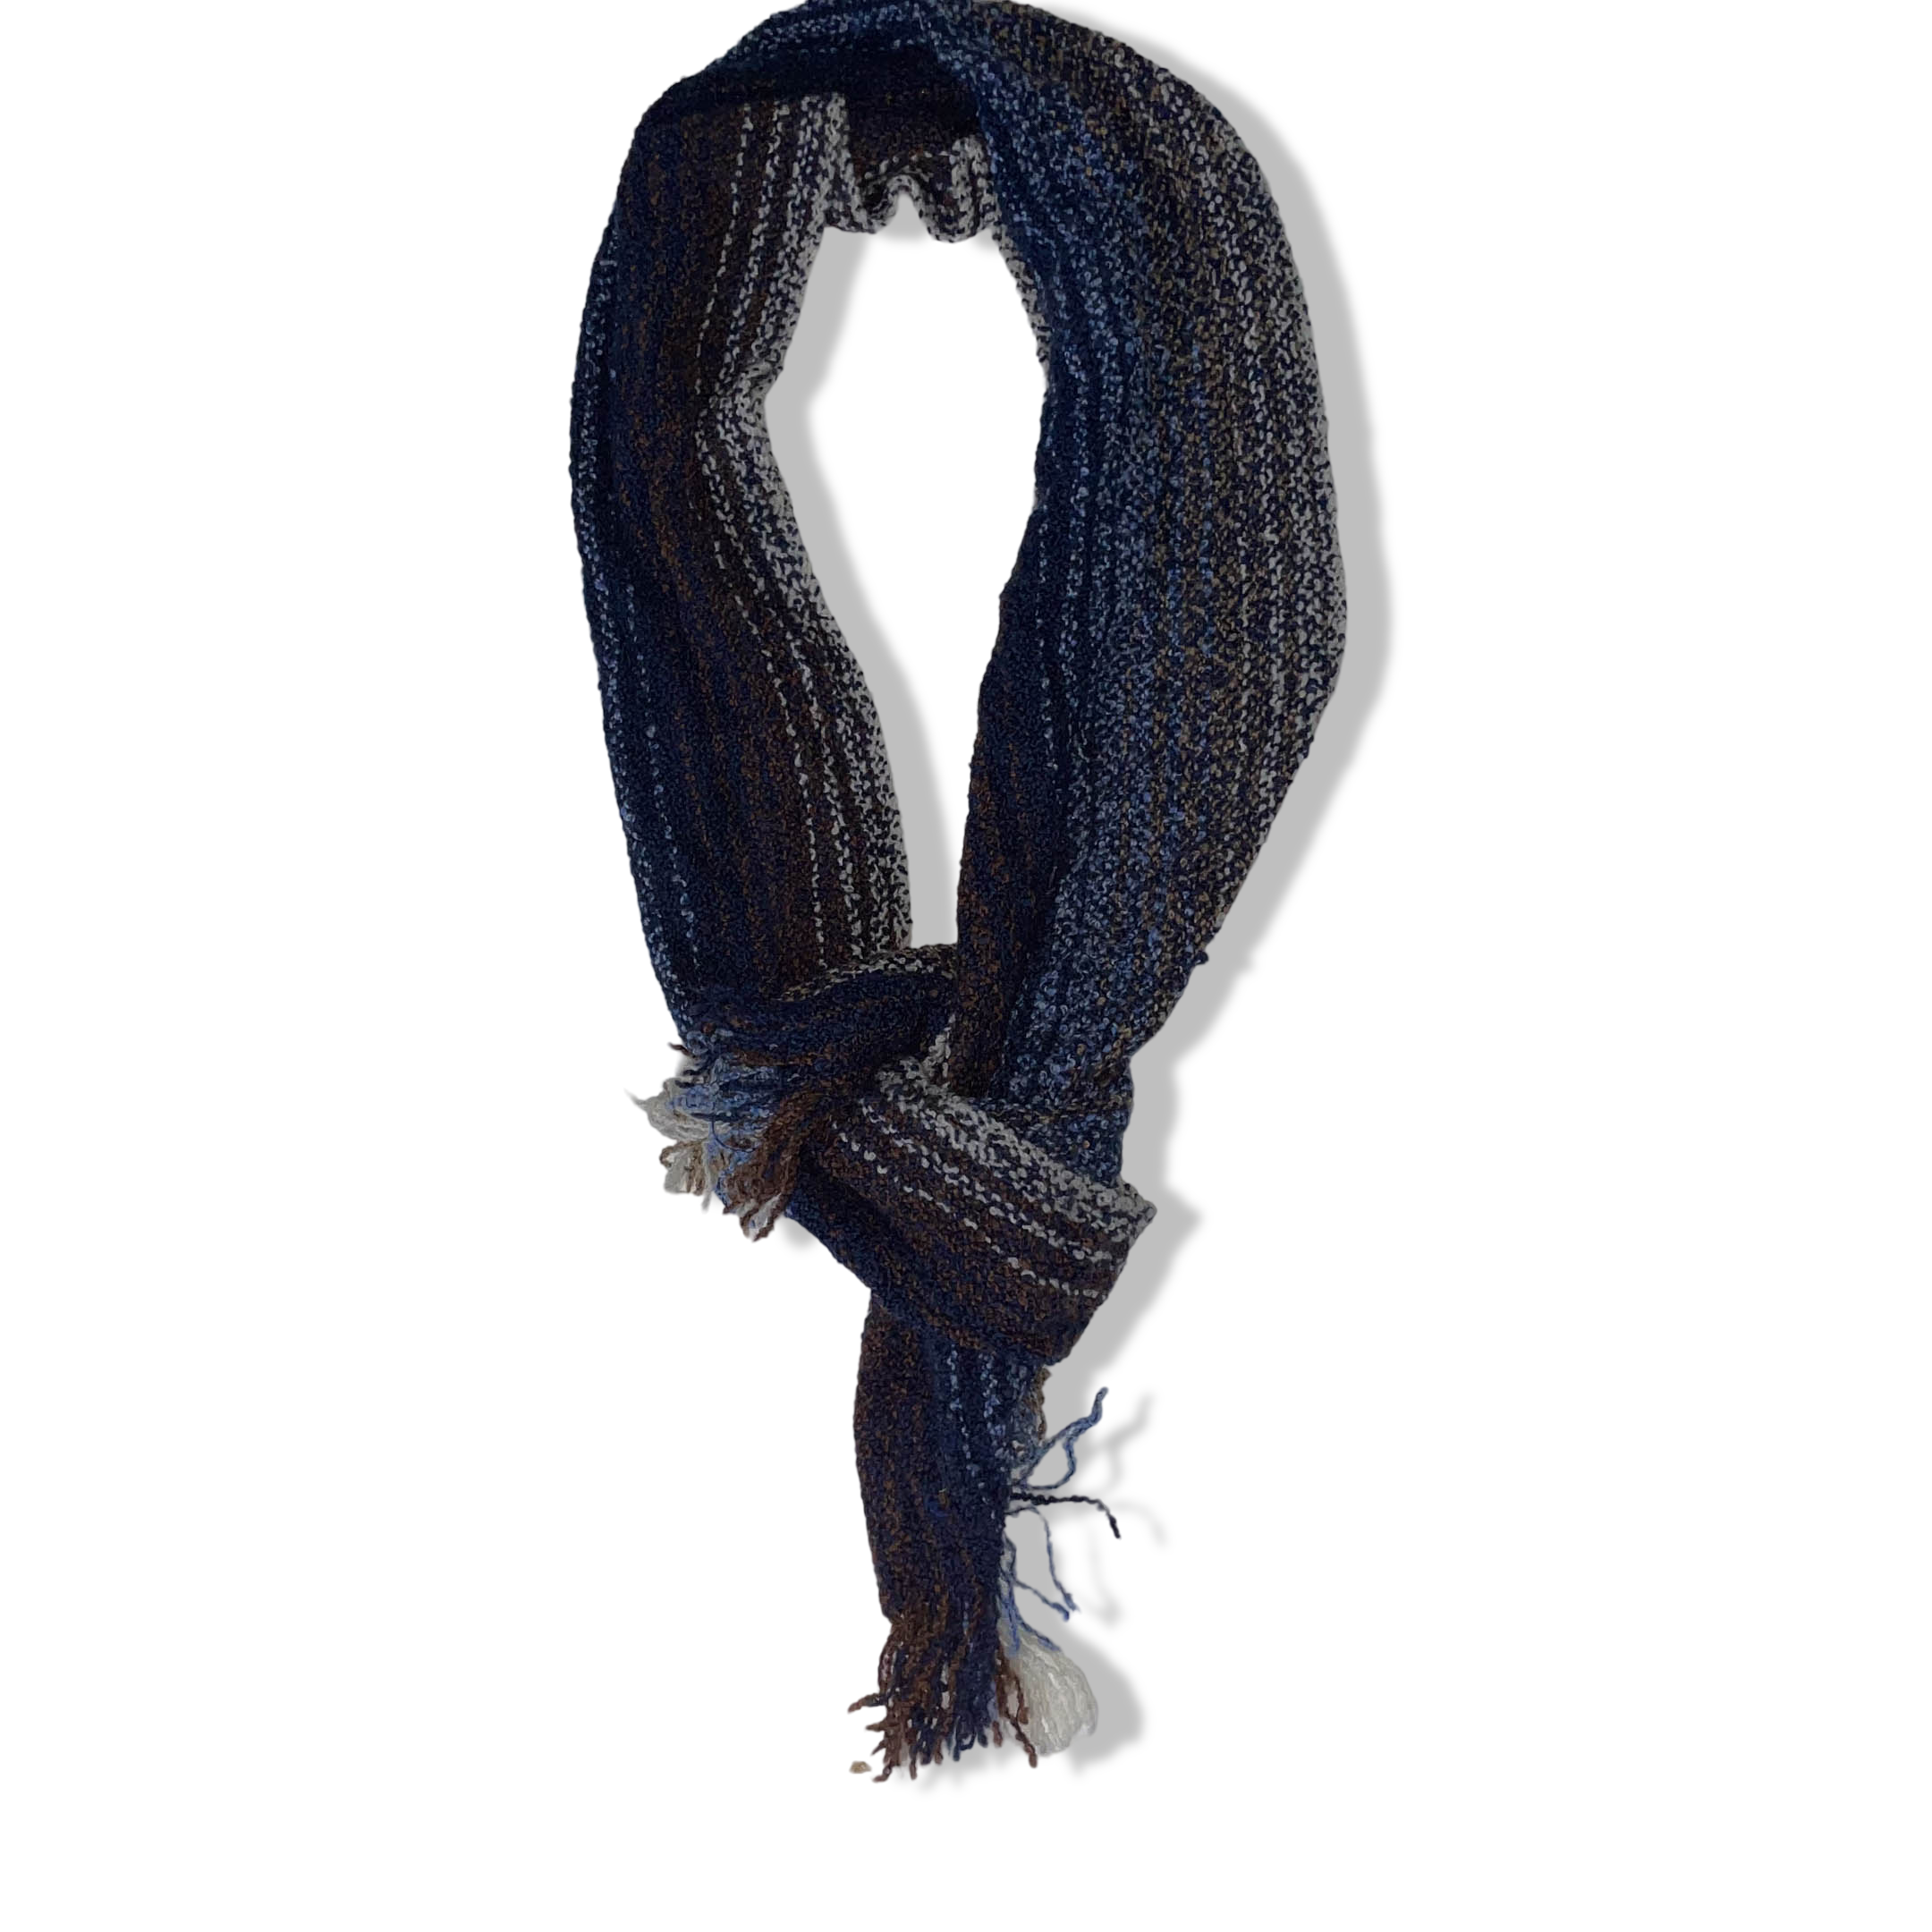 Vintage Mucros weavers multi stripe autumn basic scarf with fringe ends